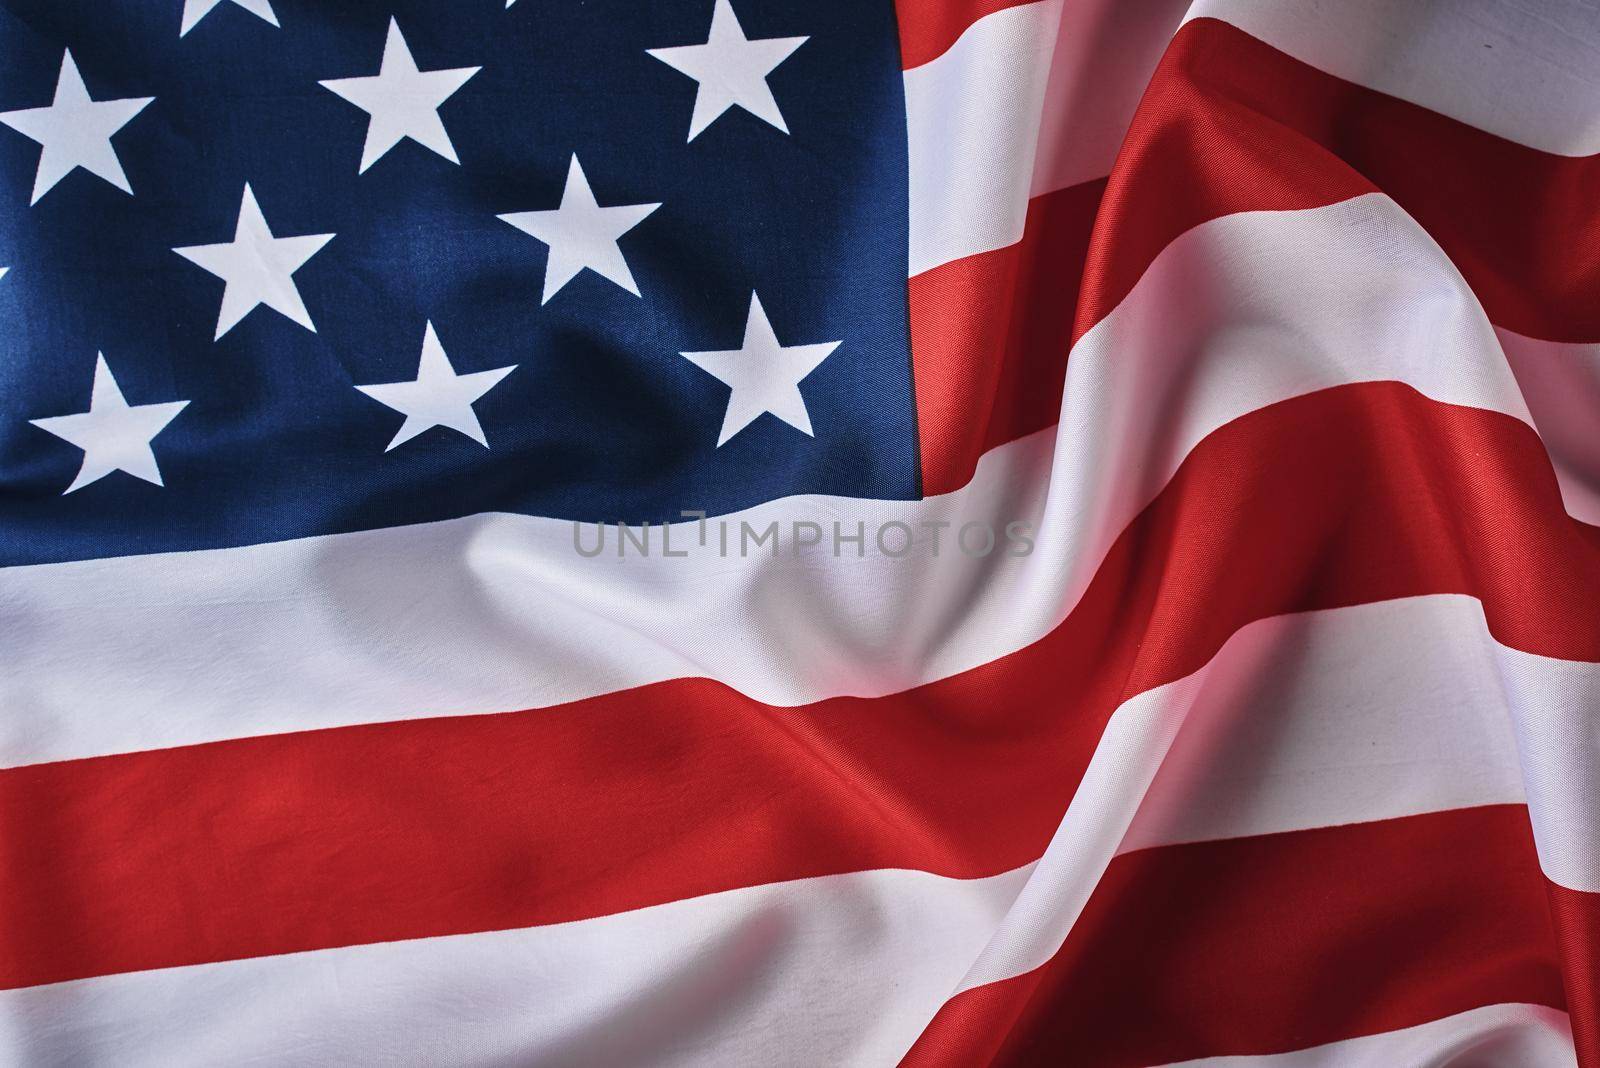 American flag background. USA flag waving, close up